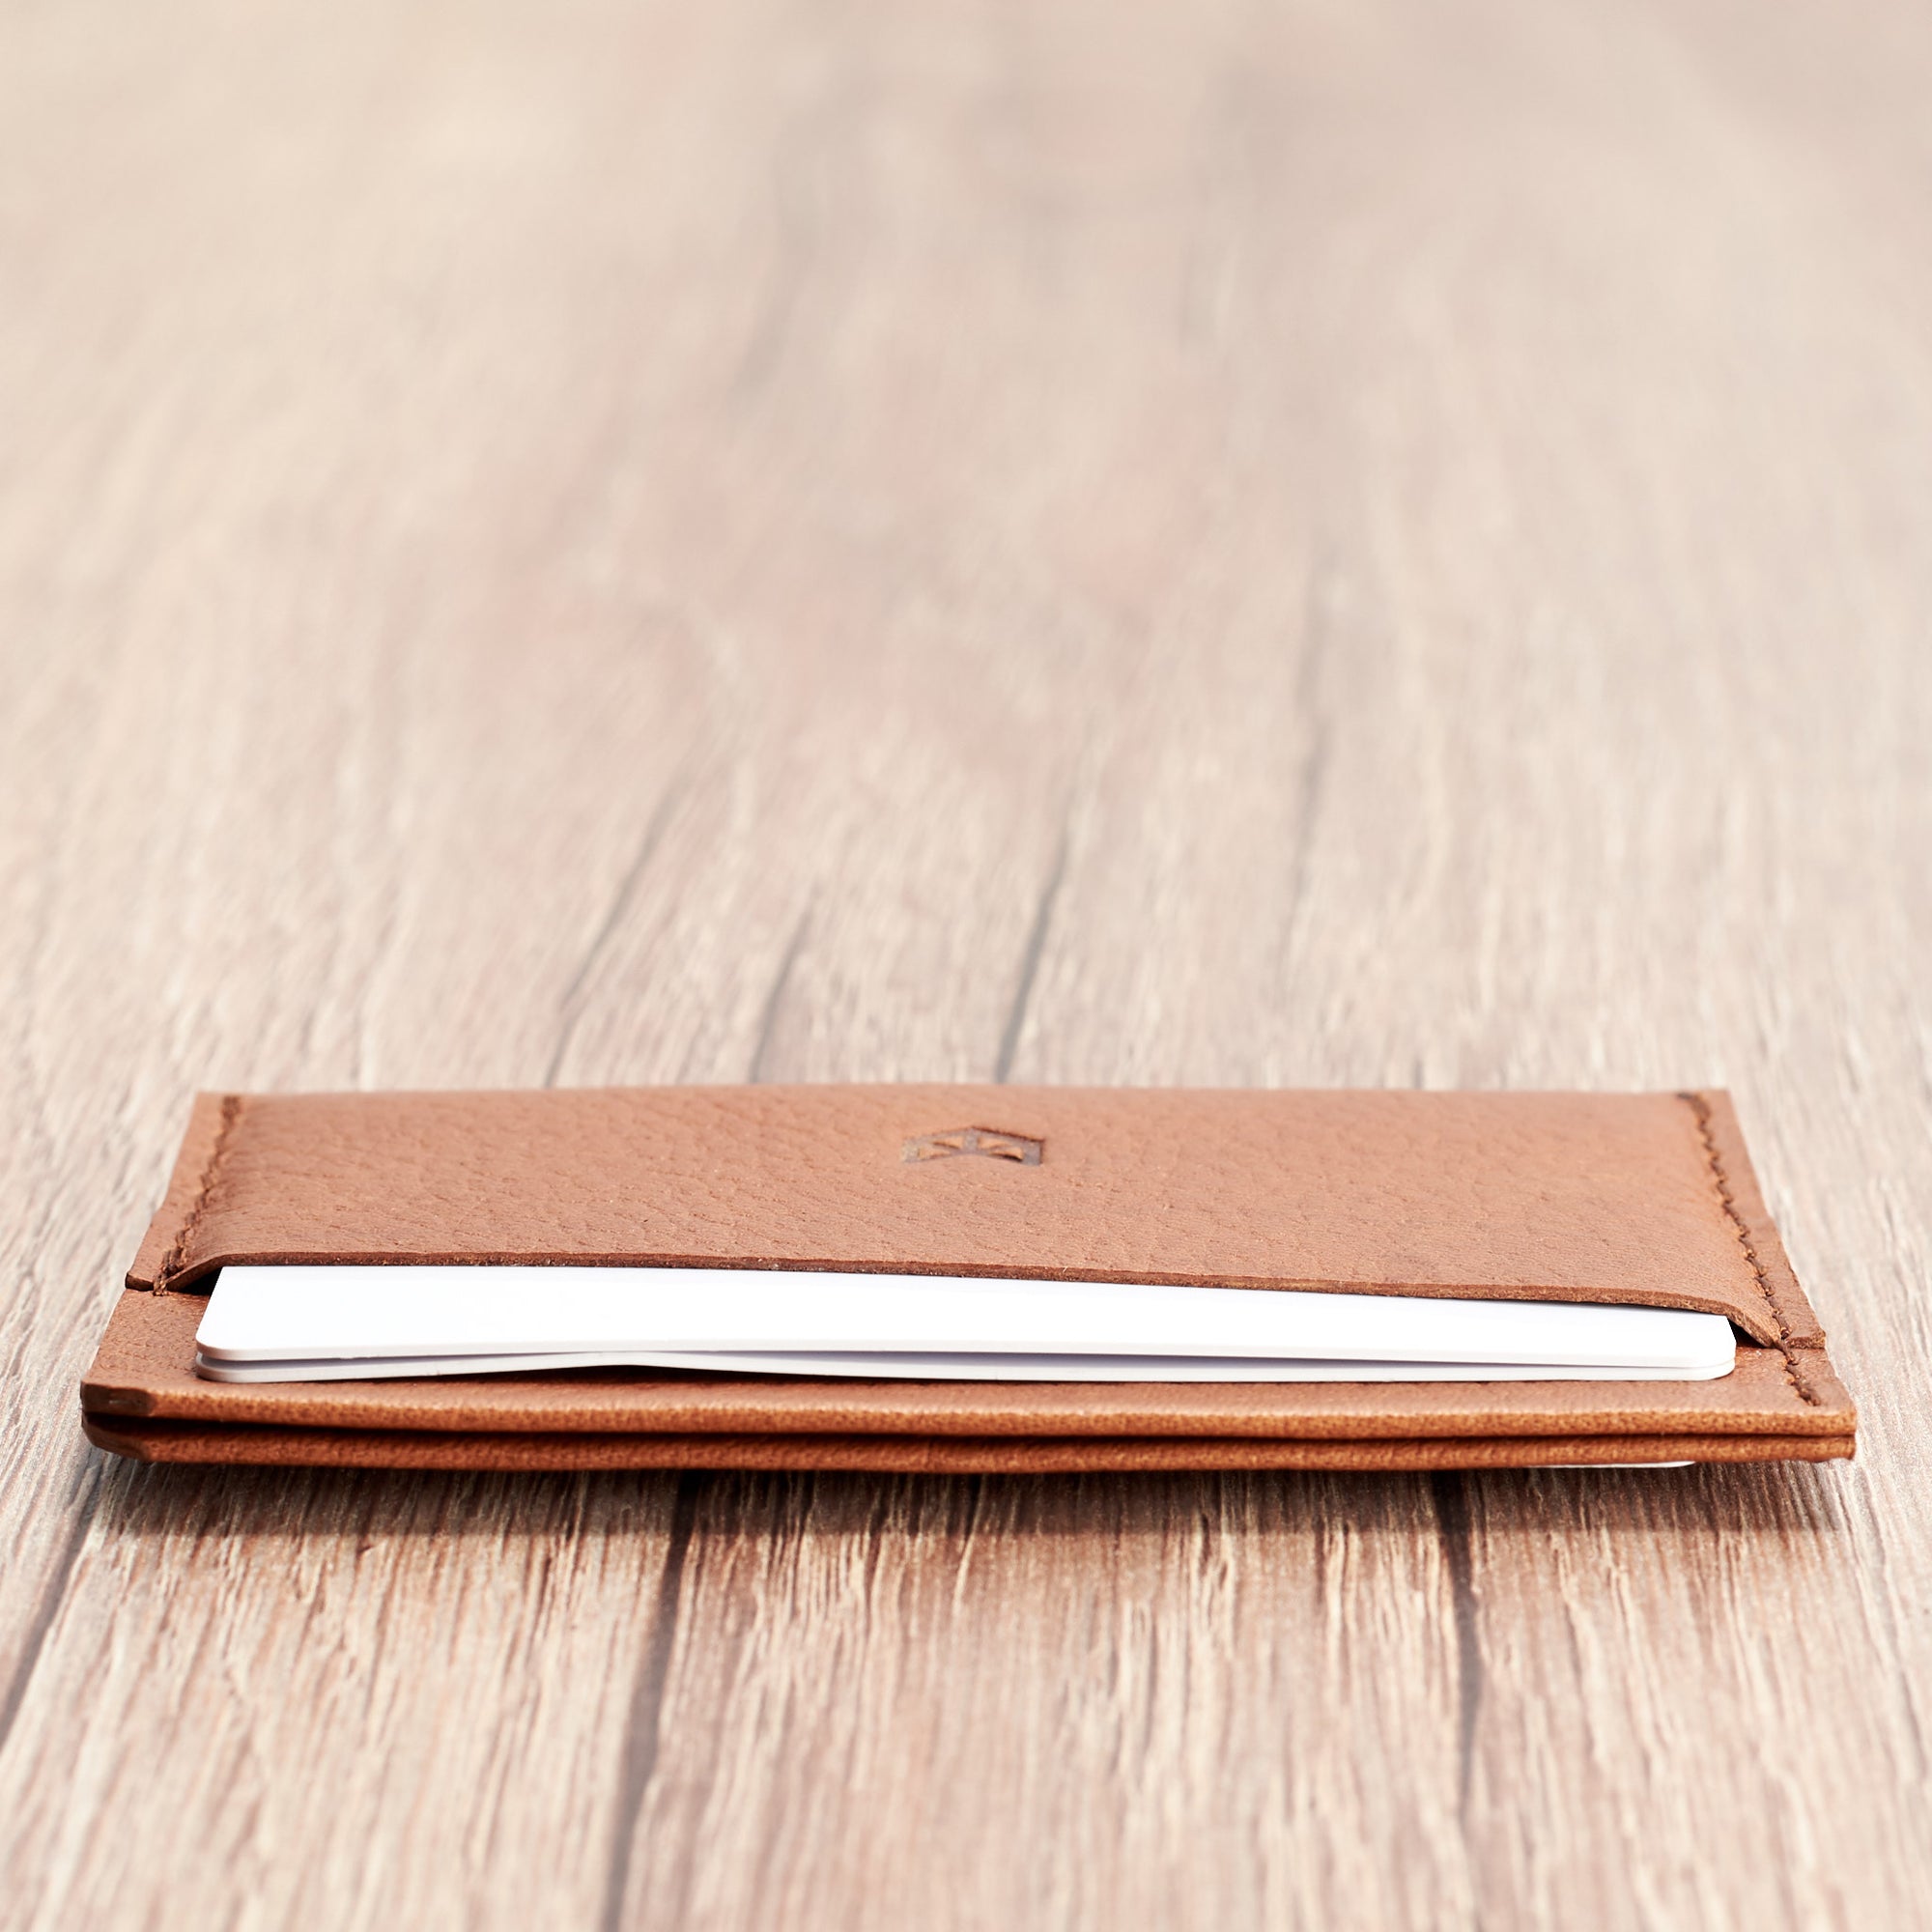 Back.Slim brown leather card holder. Gifts for men, leather tan card holder, handmade accessories, minimalist designer cards wallet